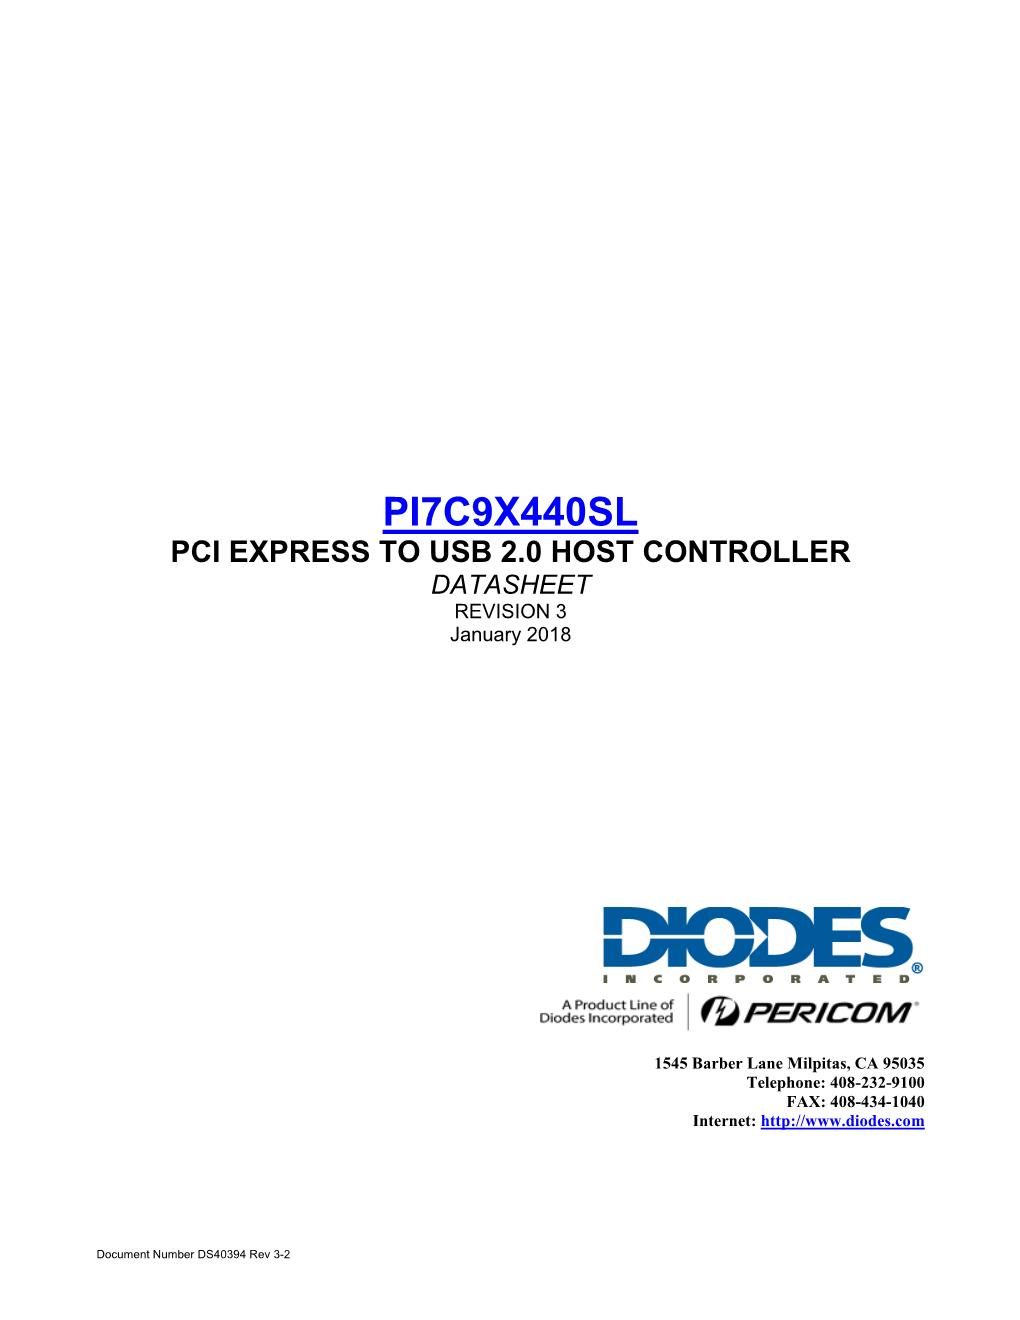 PI7C9X440SL PCI EXPRESS to USB 2.0 HOST CONTROLLER DATASHEET REVISION 3 January 2018